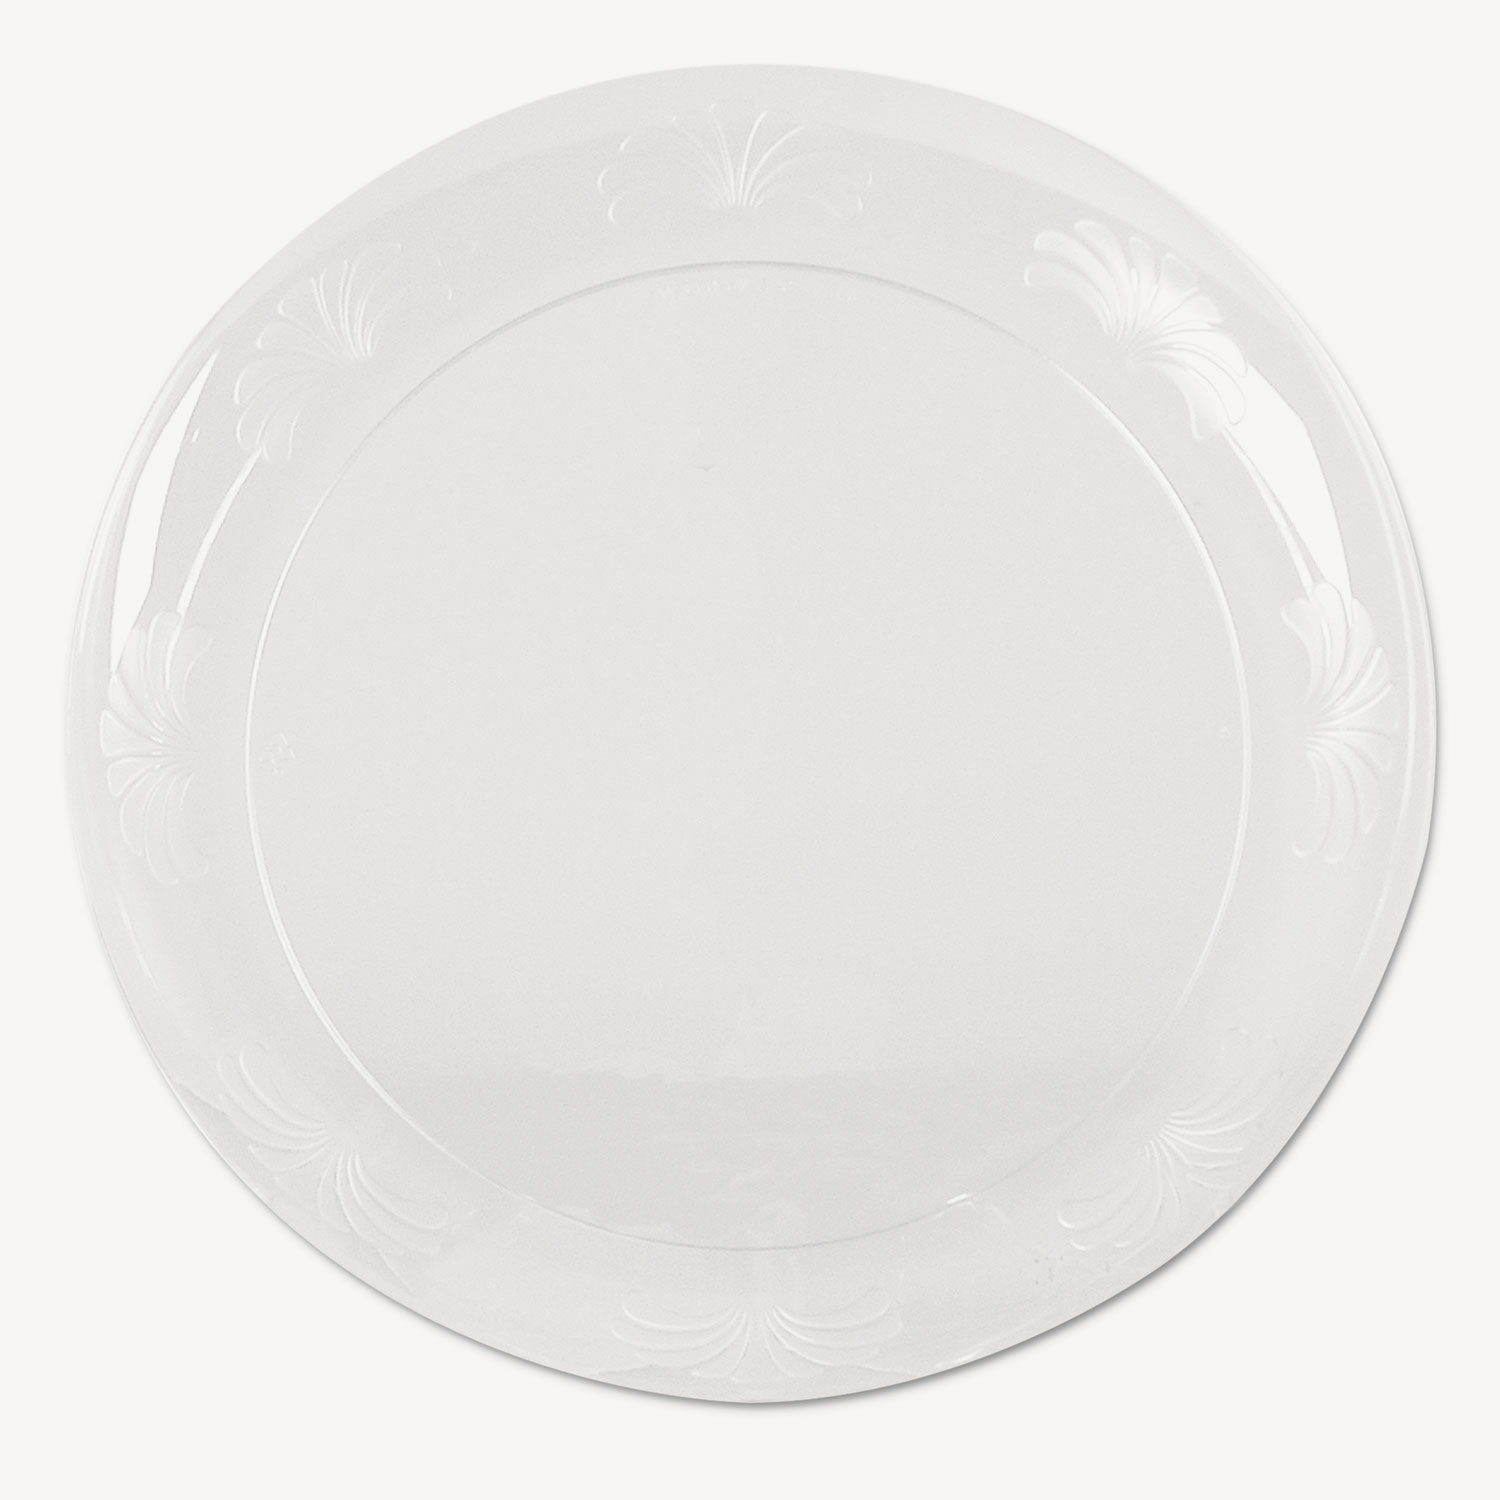 Designerware Plastic Plates, 10 1/4 Inches, Clear, Round, 8/Pack